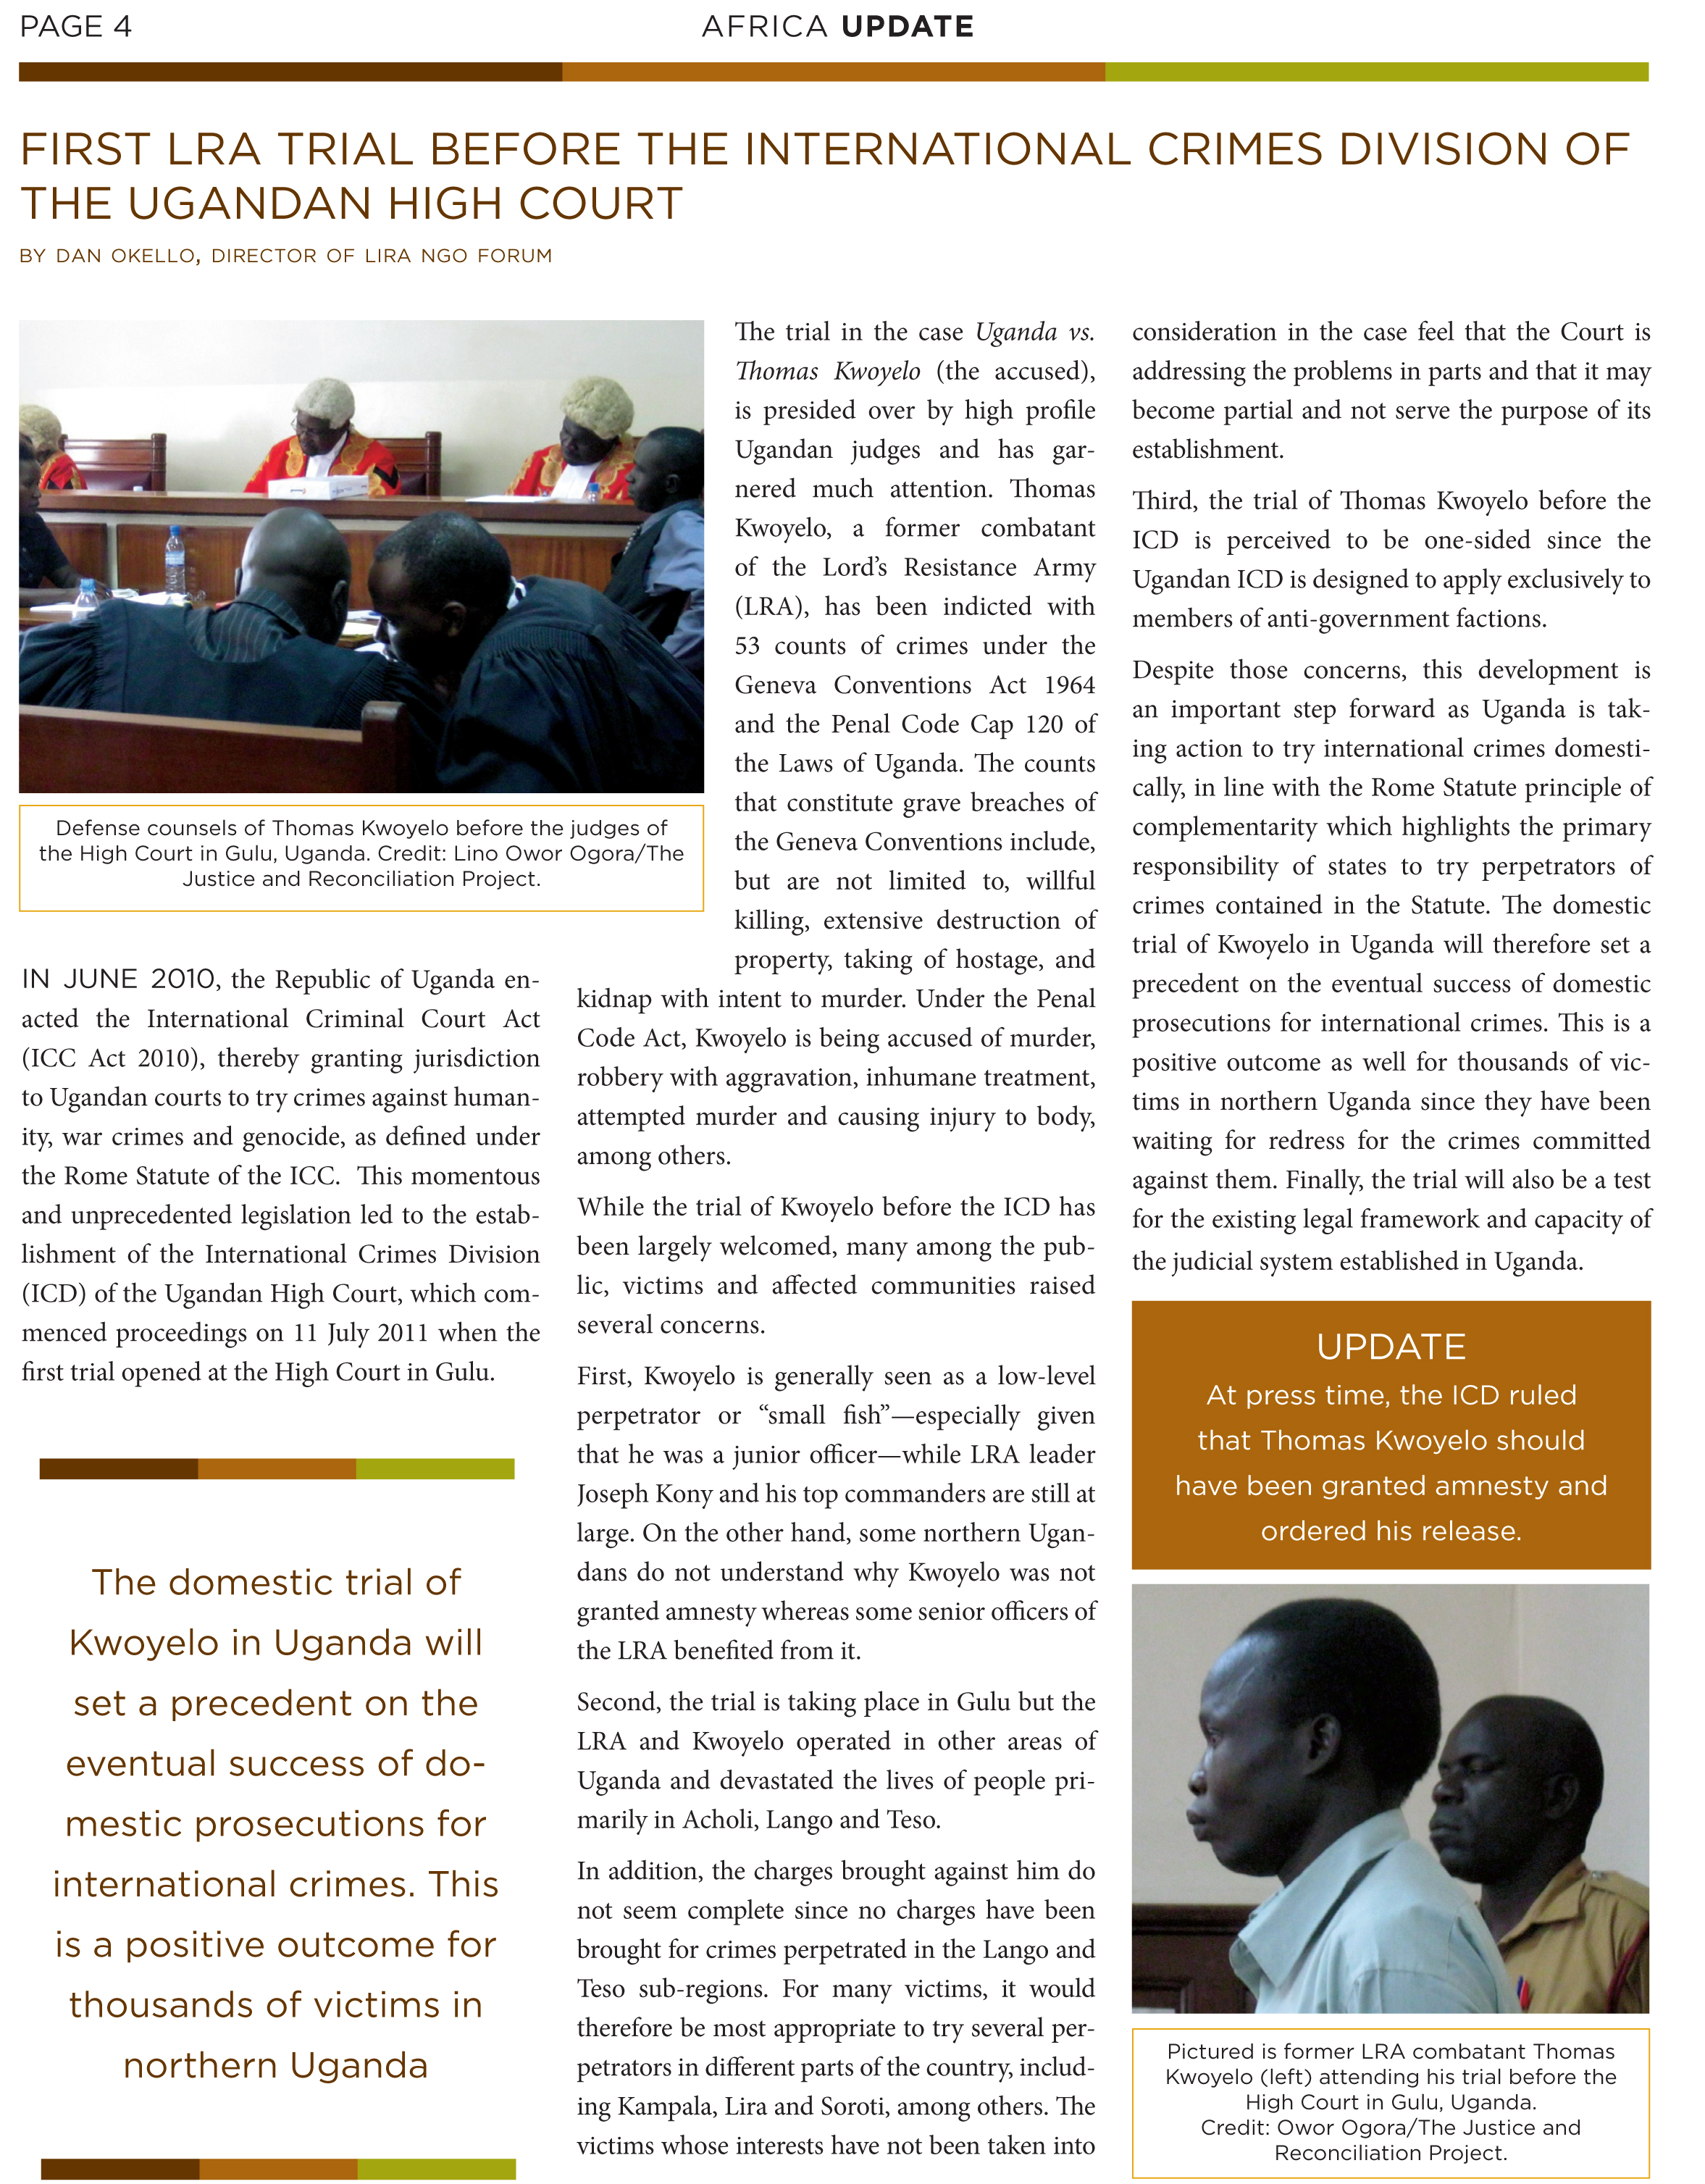 CICC Africa Update Sept 2011 pg4